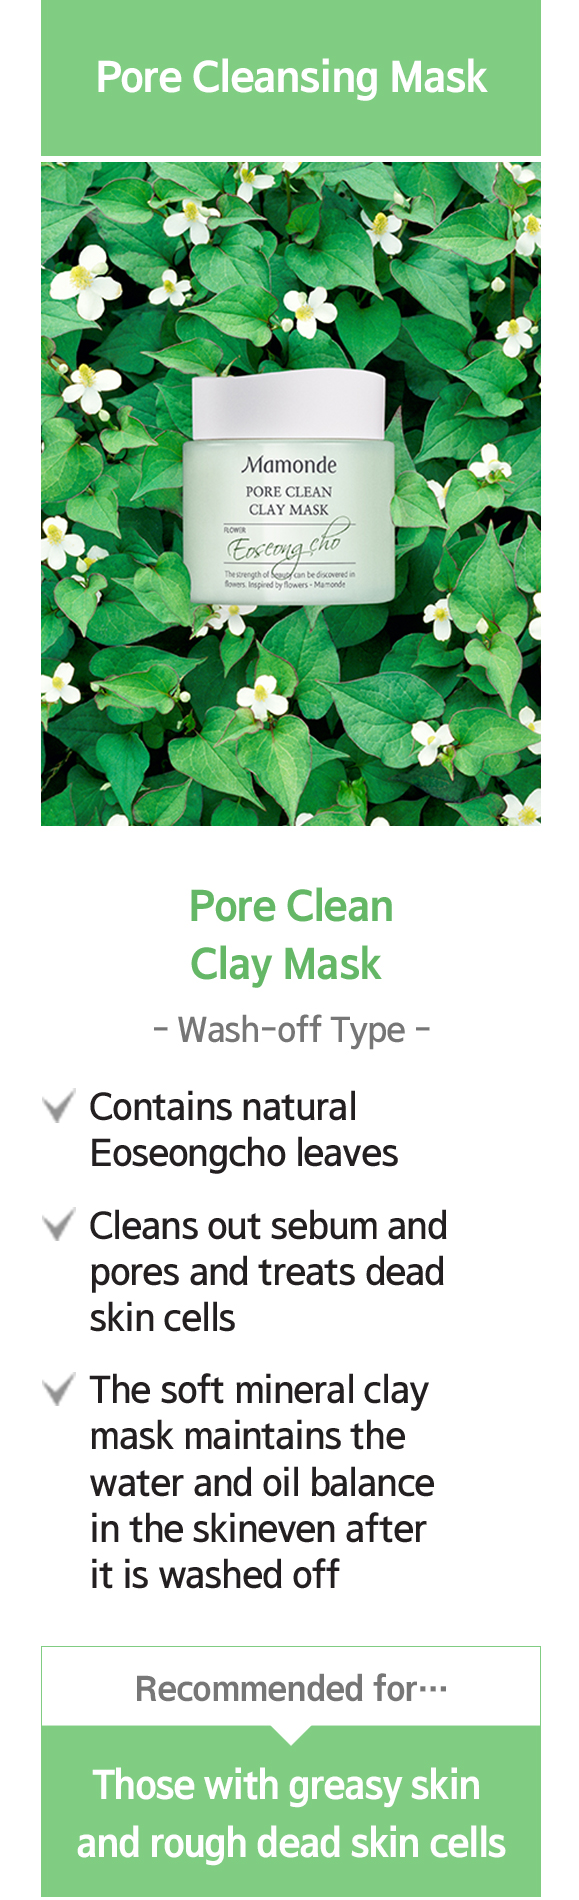 pore clean mask detail link